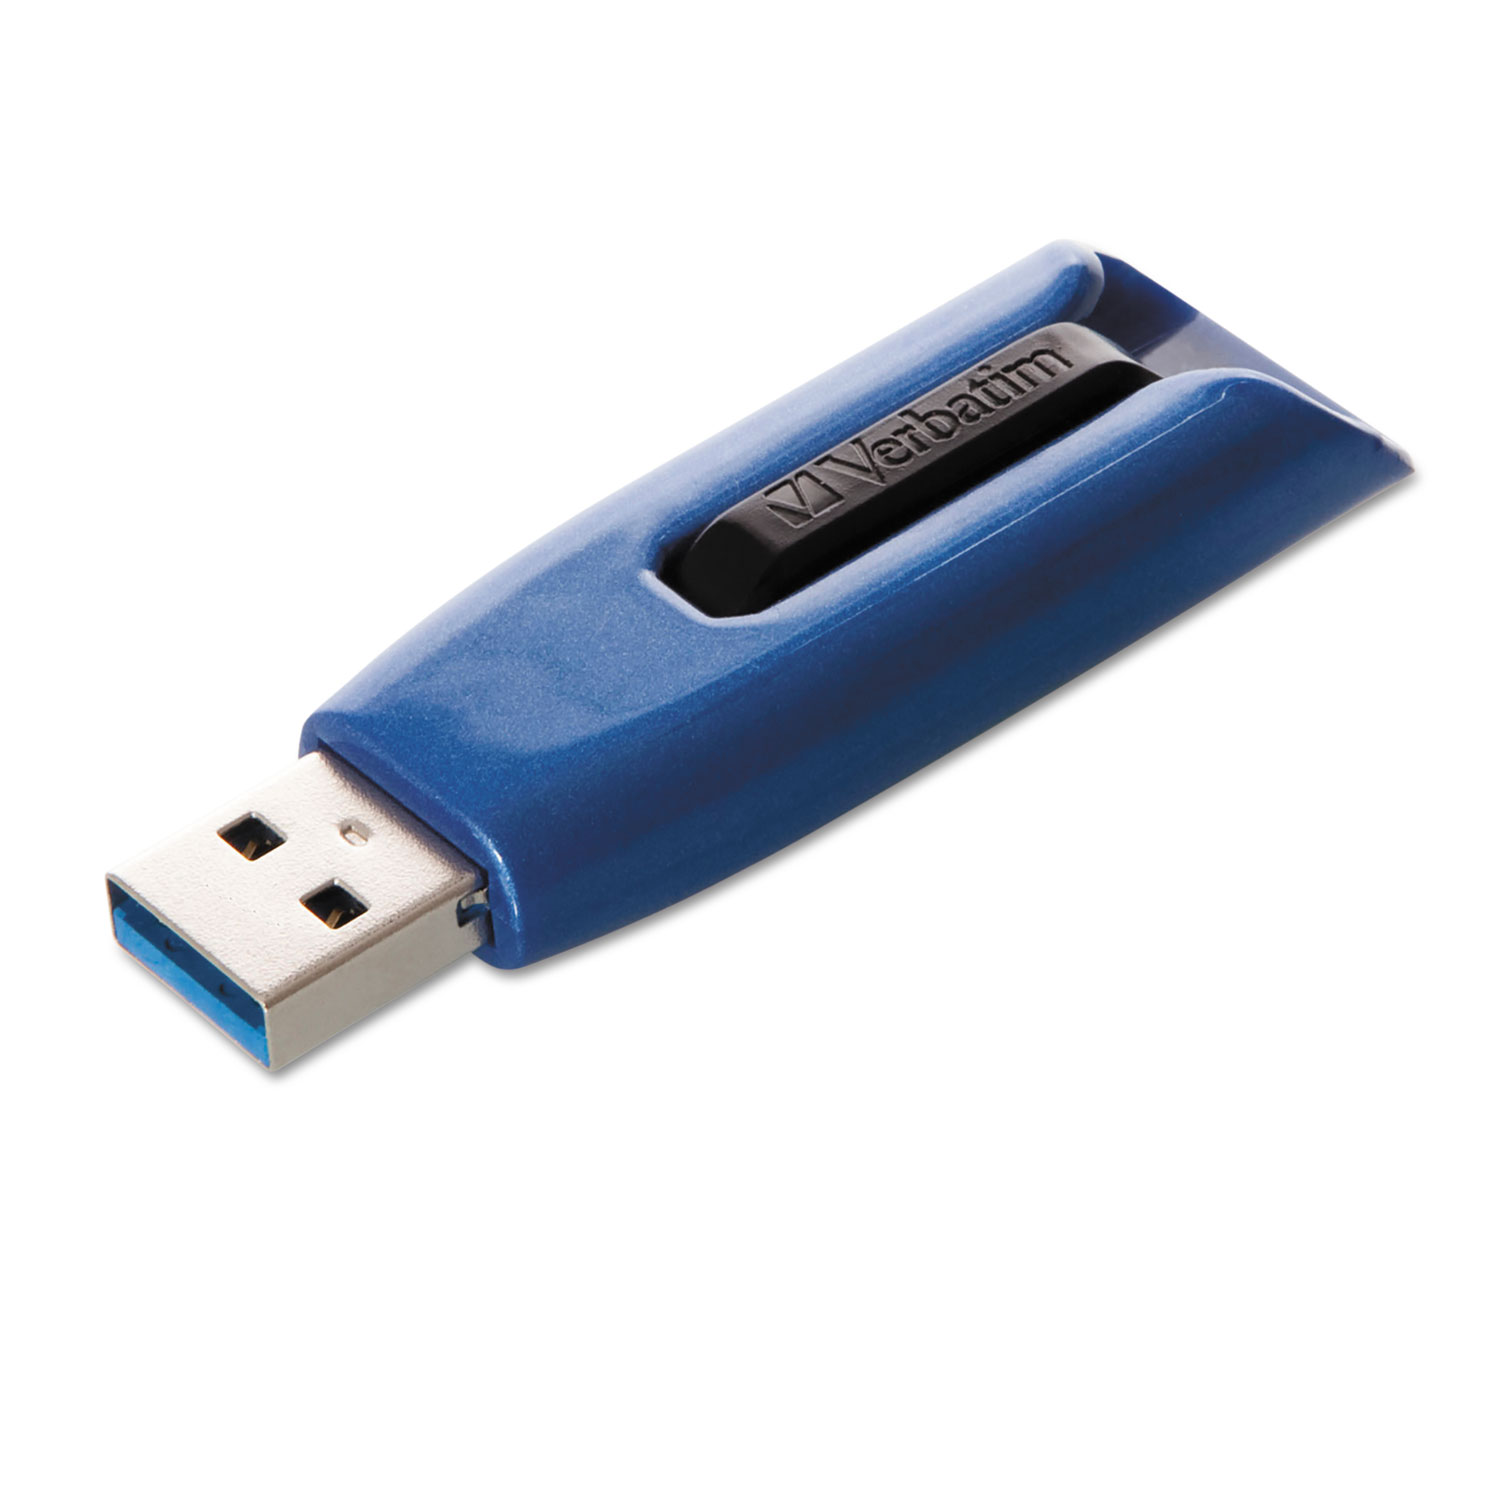  Verbatim 49808 V3 Max USB 3.0 Flash Drive, 128 GB, Blue (VER49808) 